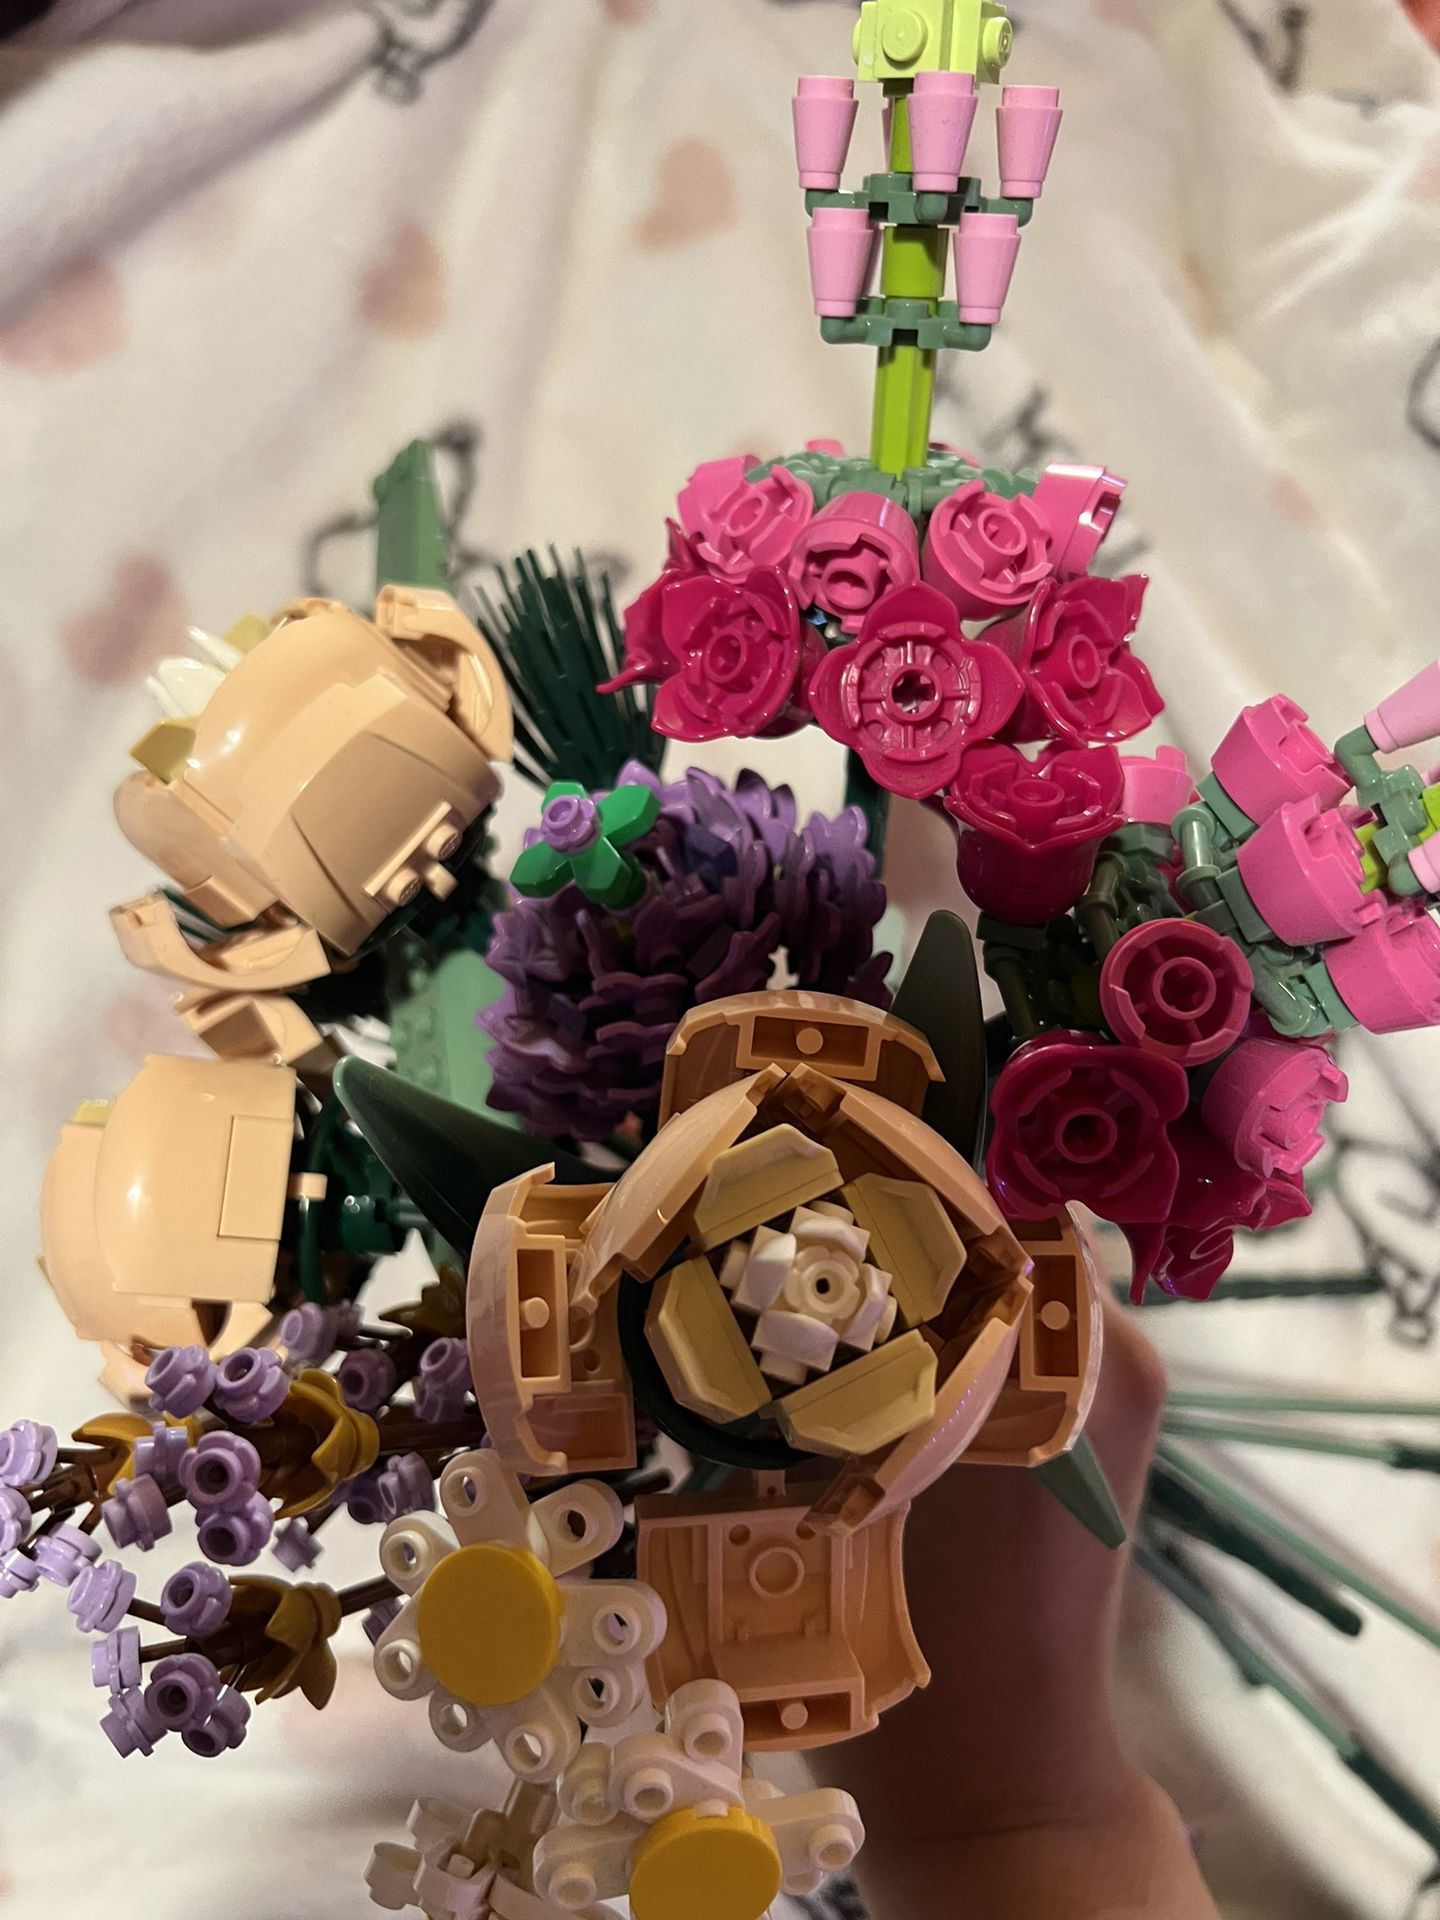 lego flowers